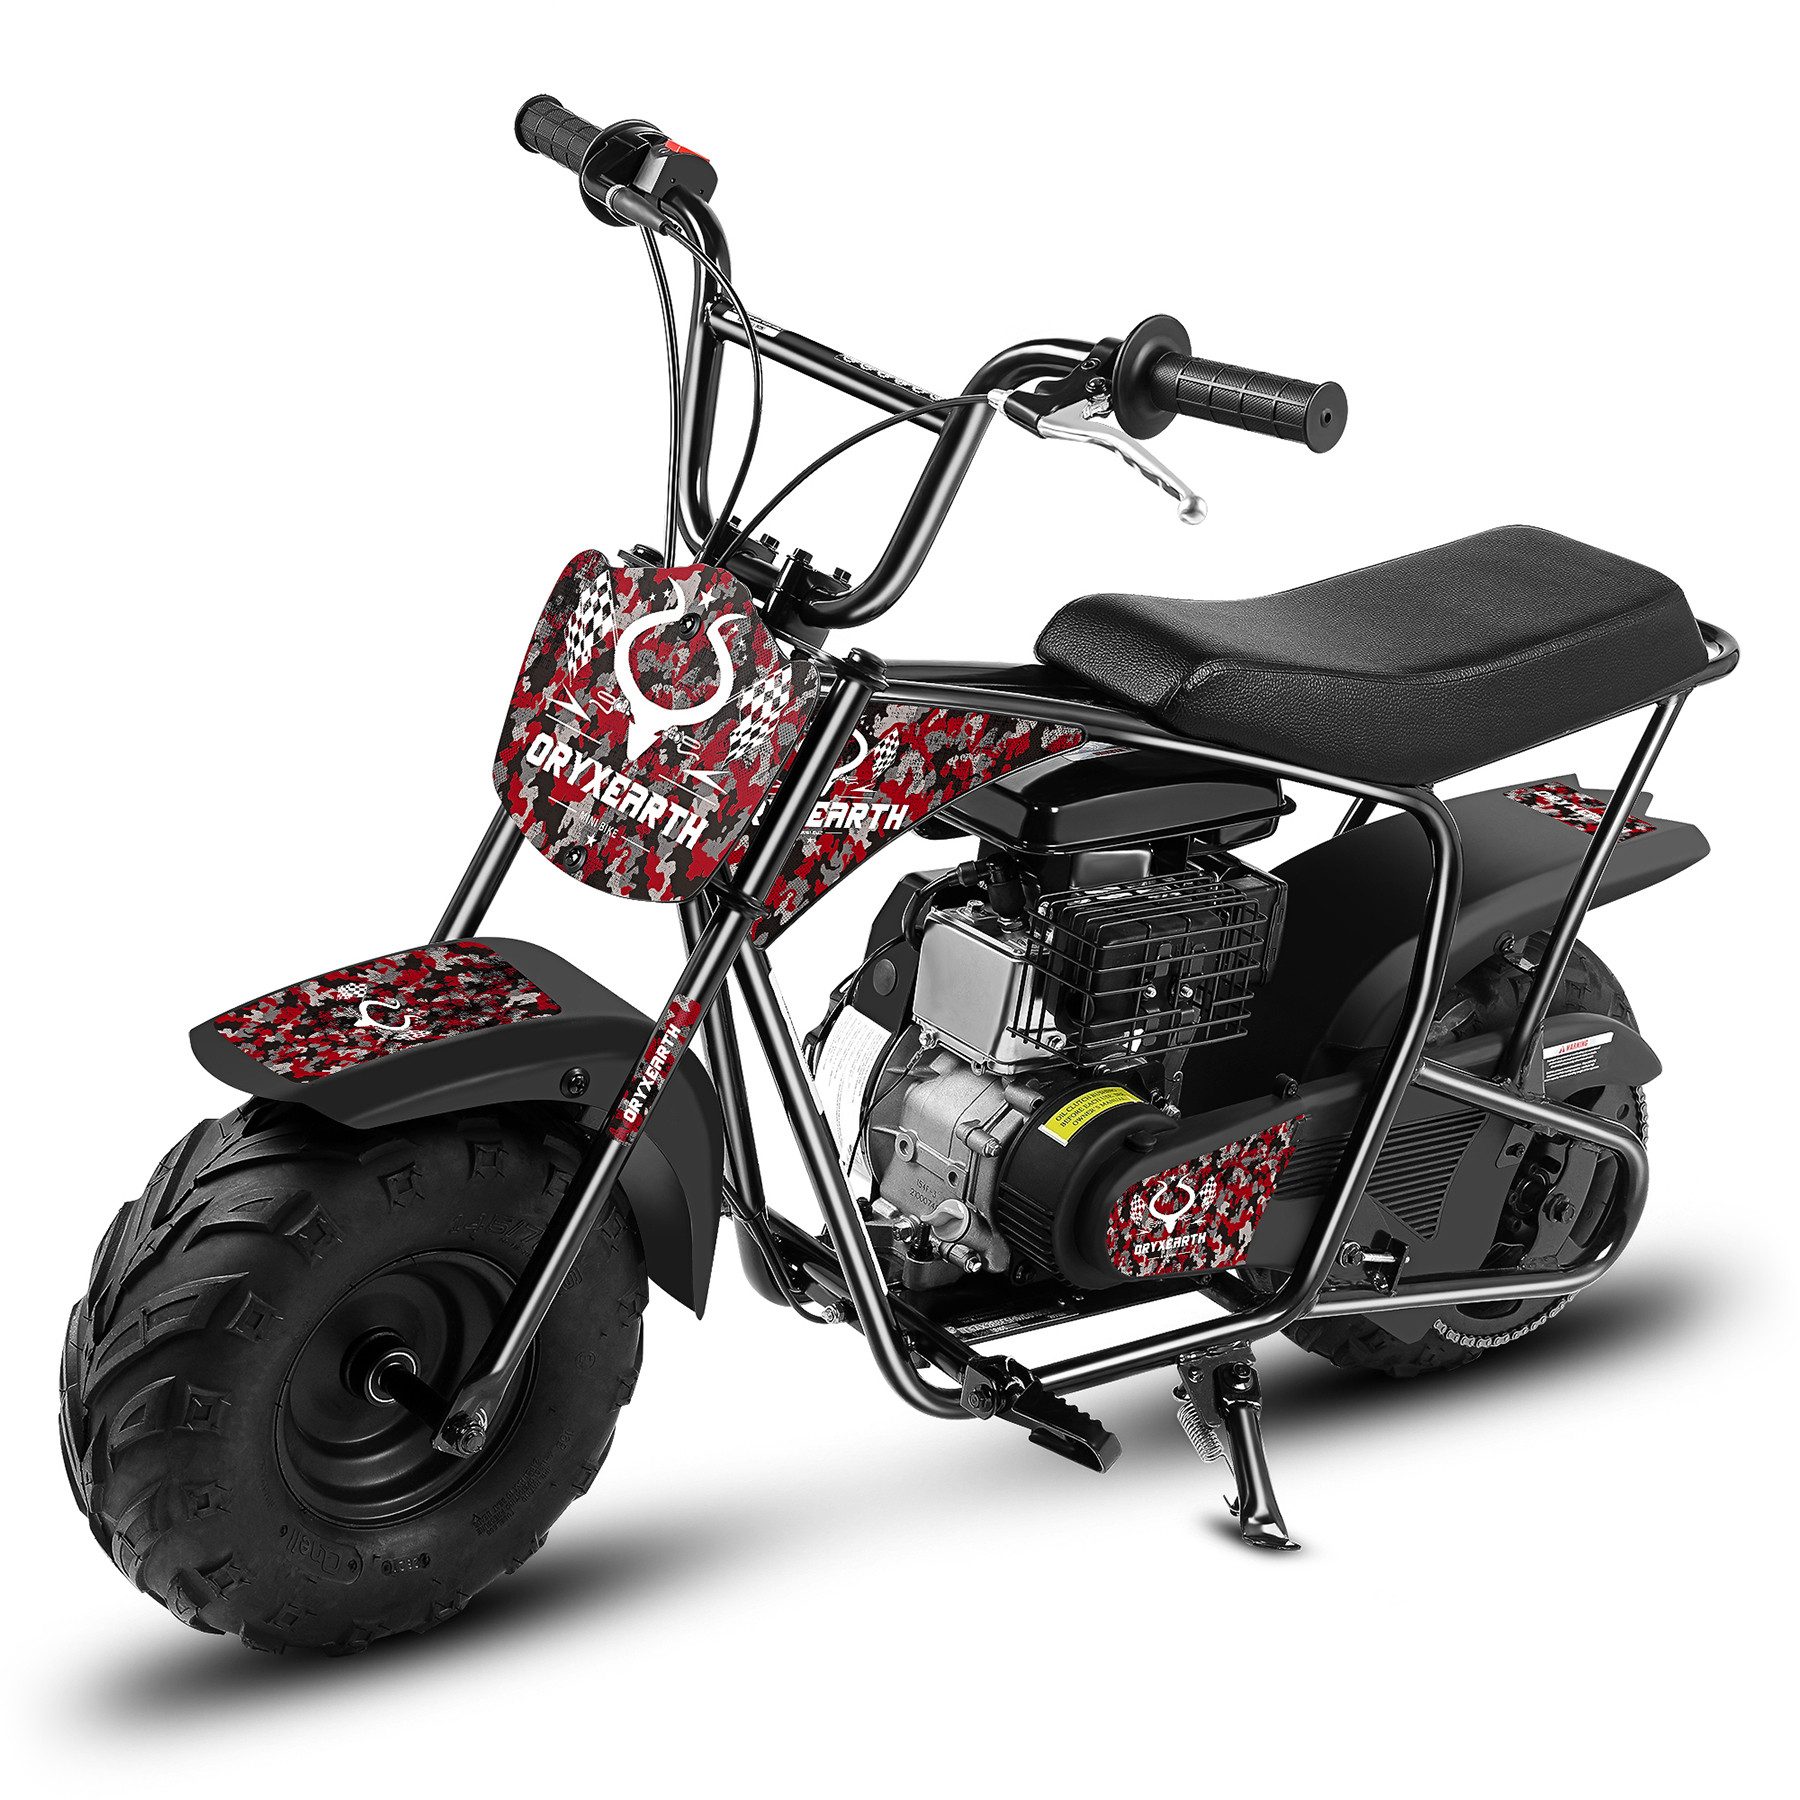 Oryxearth Dirt-Bike Dirt-Bike für Kinder Motocross 105 cc Gasbetriebenes Offroad-Motorrad